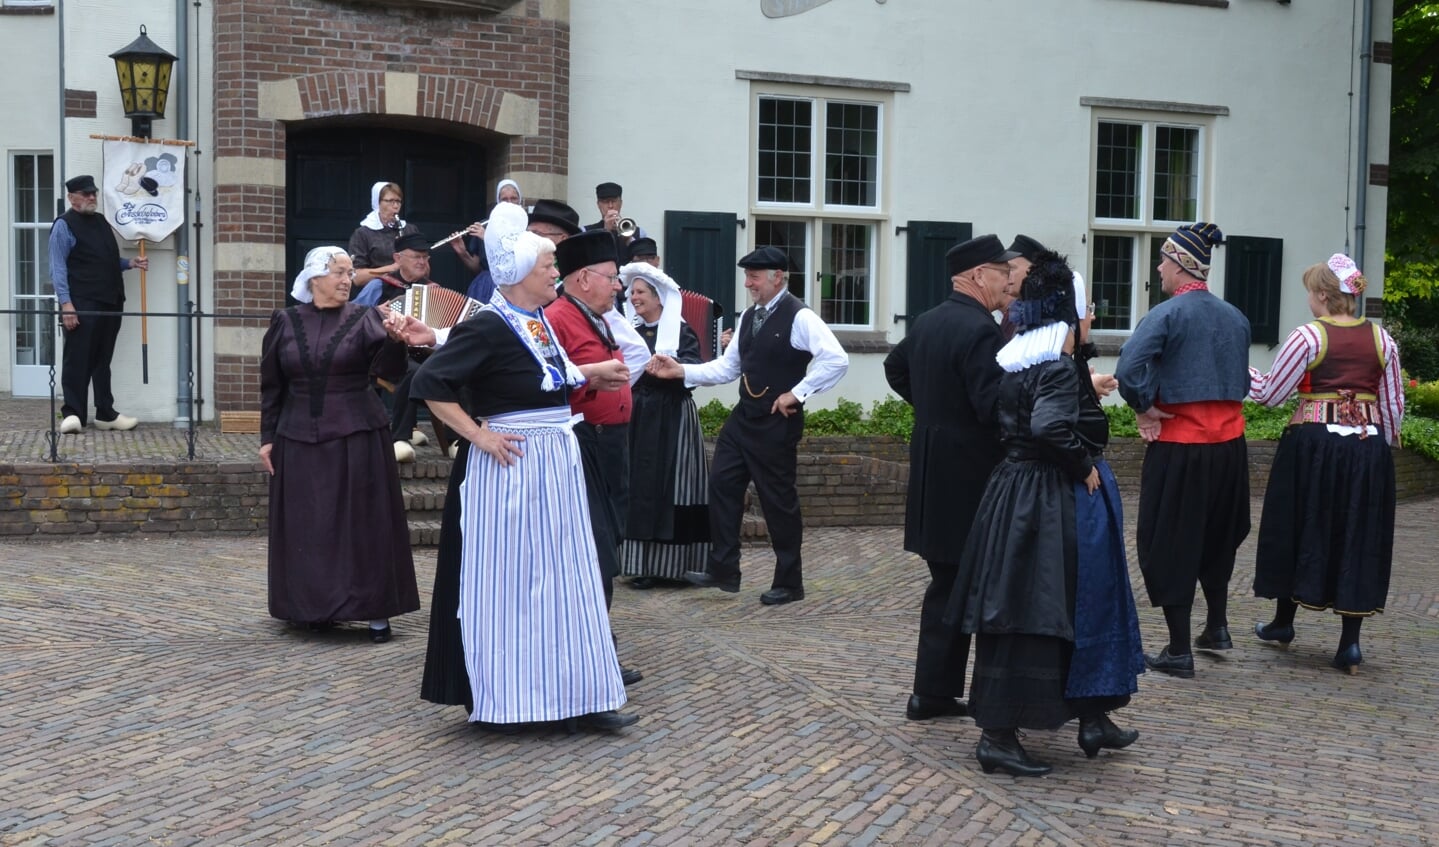 Folkloristische dansgroep De Iesselschotsers. Foto: Johan Braakman